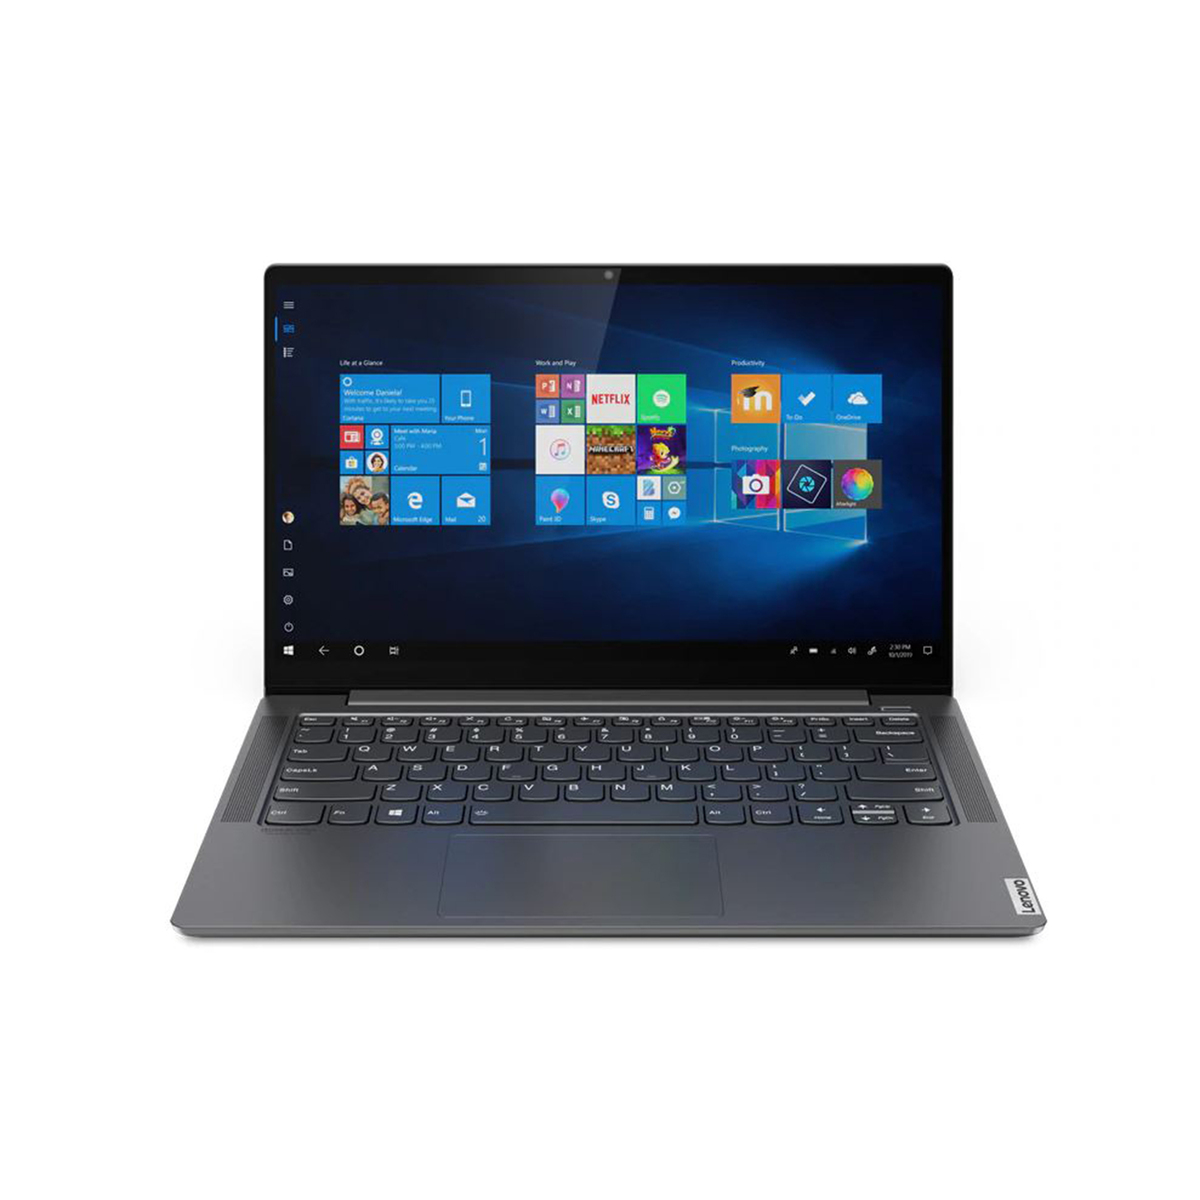 Lenovo Ideapad Yoga S740-14IIL (81RS008DAX) Core i7-1065G7, 16GBRAM, 1TB SSD, MX250 2GB, 14" FHD,Windows 10 , Grey